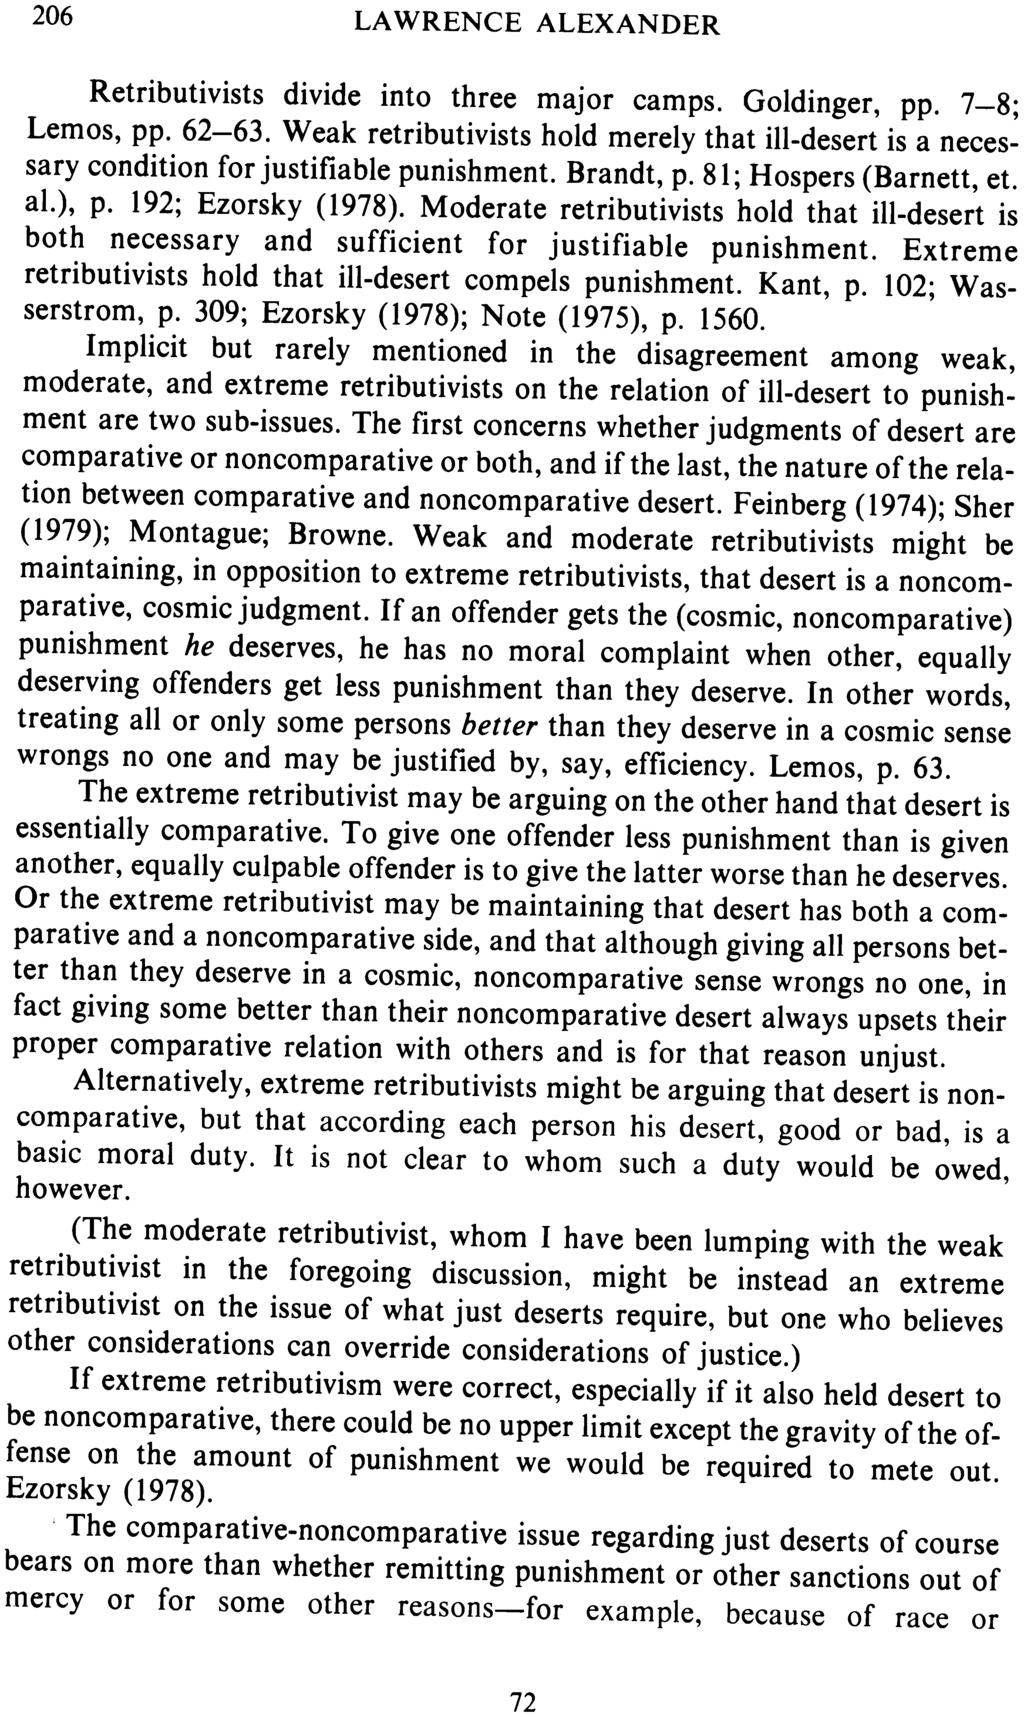 206 LA WRENCE ALEXANDER Retributivists divide into three major camps. Goldinger, pp. 7-8; Lemos, pp. 62-63.